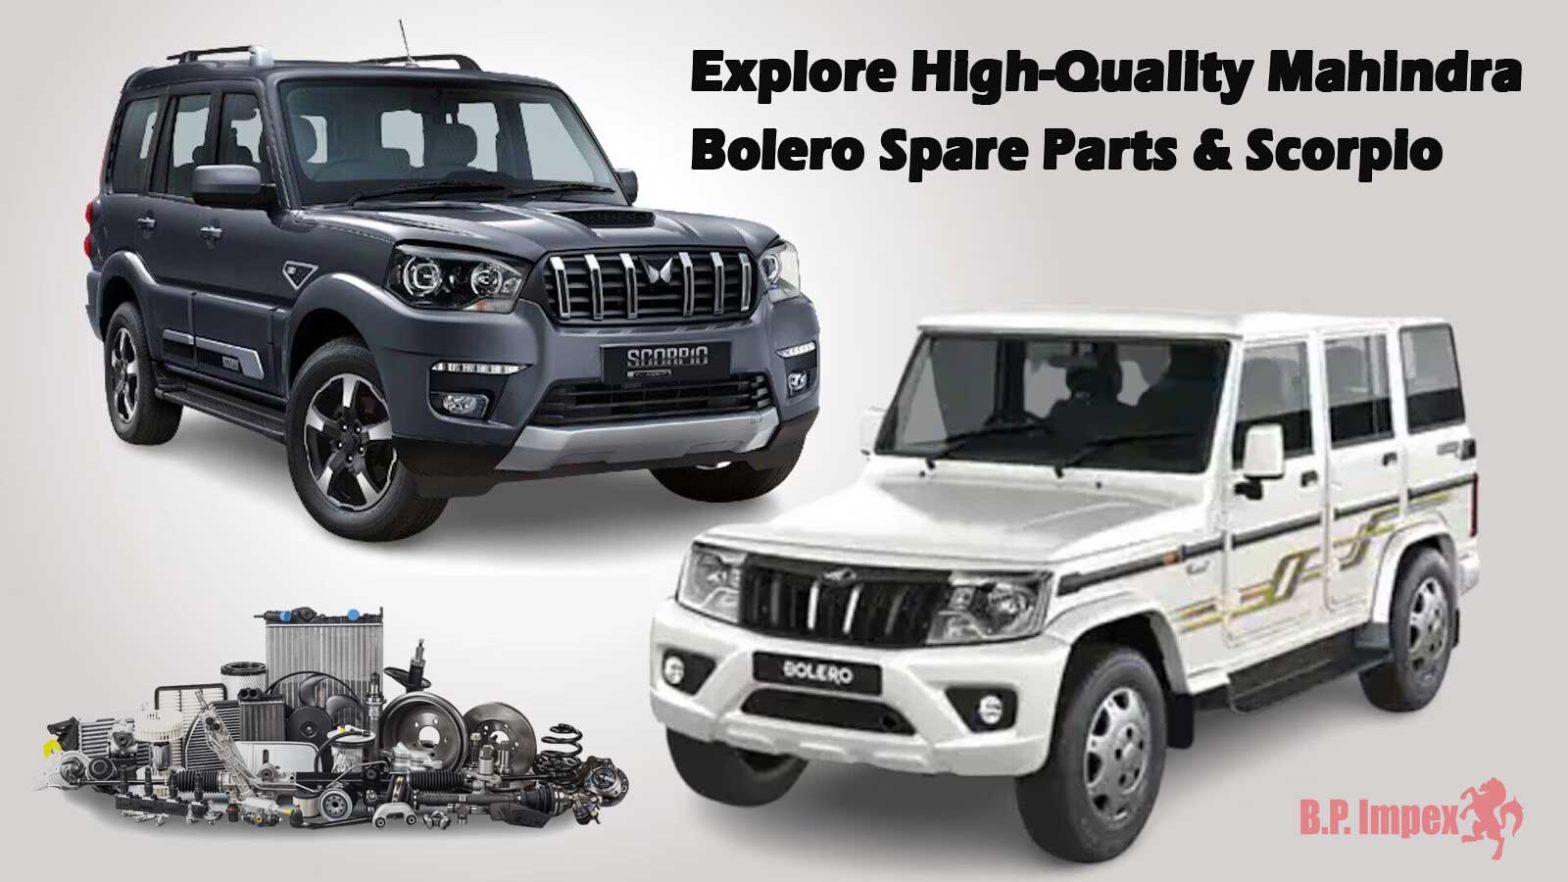 Explore High-Quality Mahindra Bolero Spare Parts or Scorpio